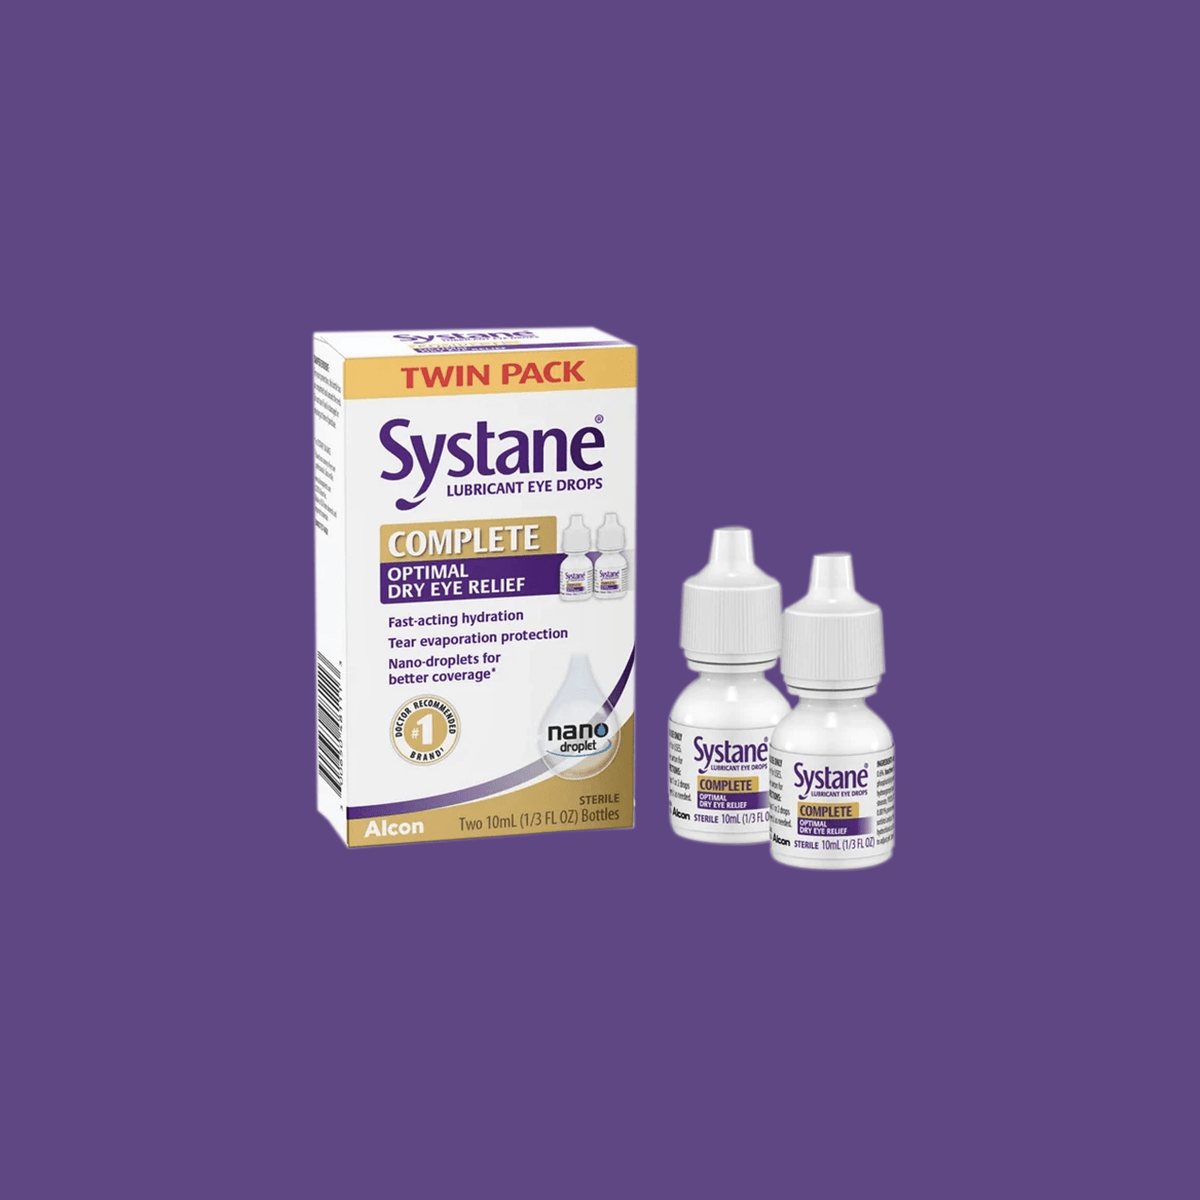 Systane Complete, Lubricant Eye Drops for Dry Eye Symptoms, Twin Pack (2 x 10ml Bottle) - Dryeye Rescue